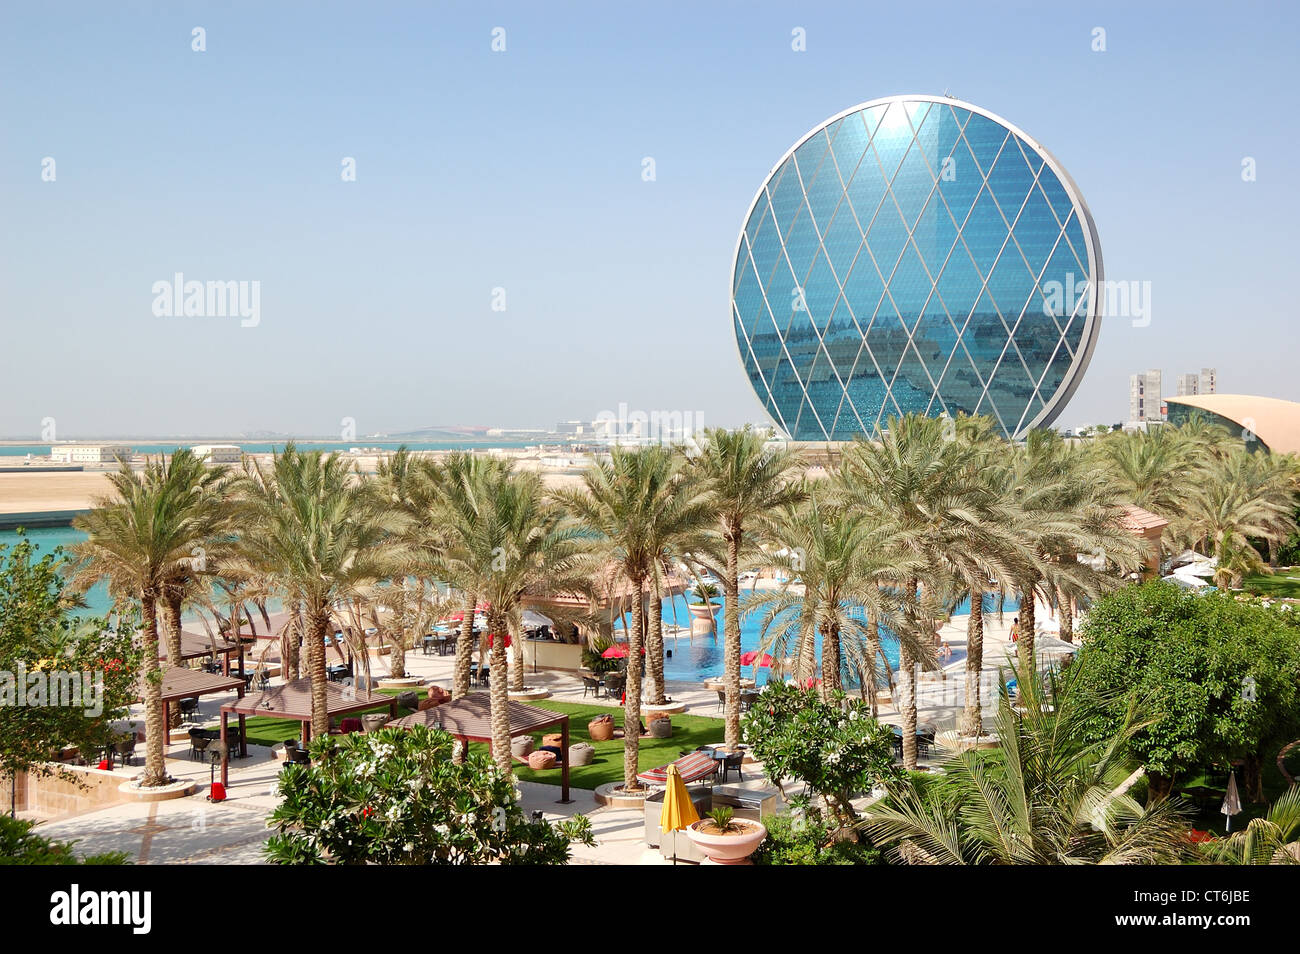 The luxury hotel and circular building, Abu Dhabi, UAE Stock Photo